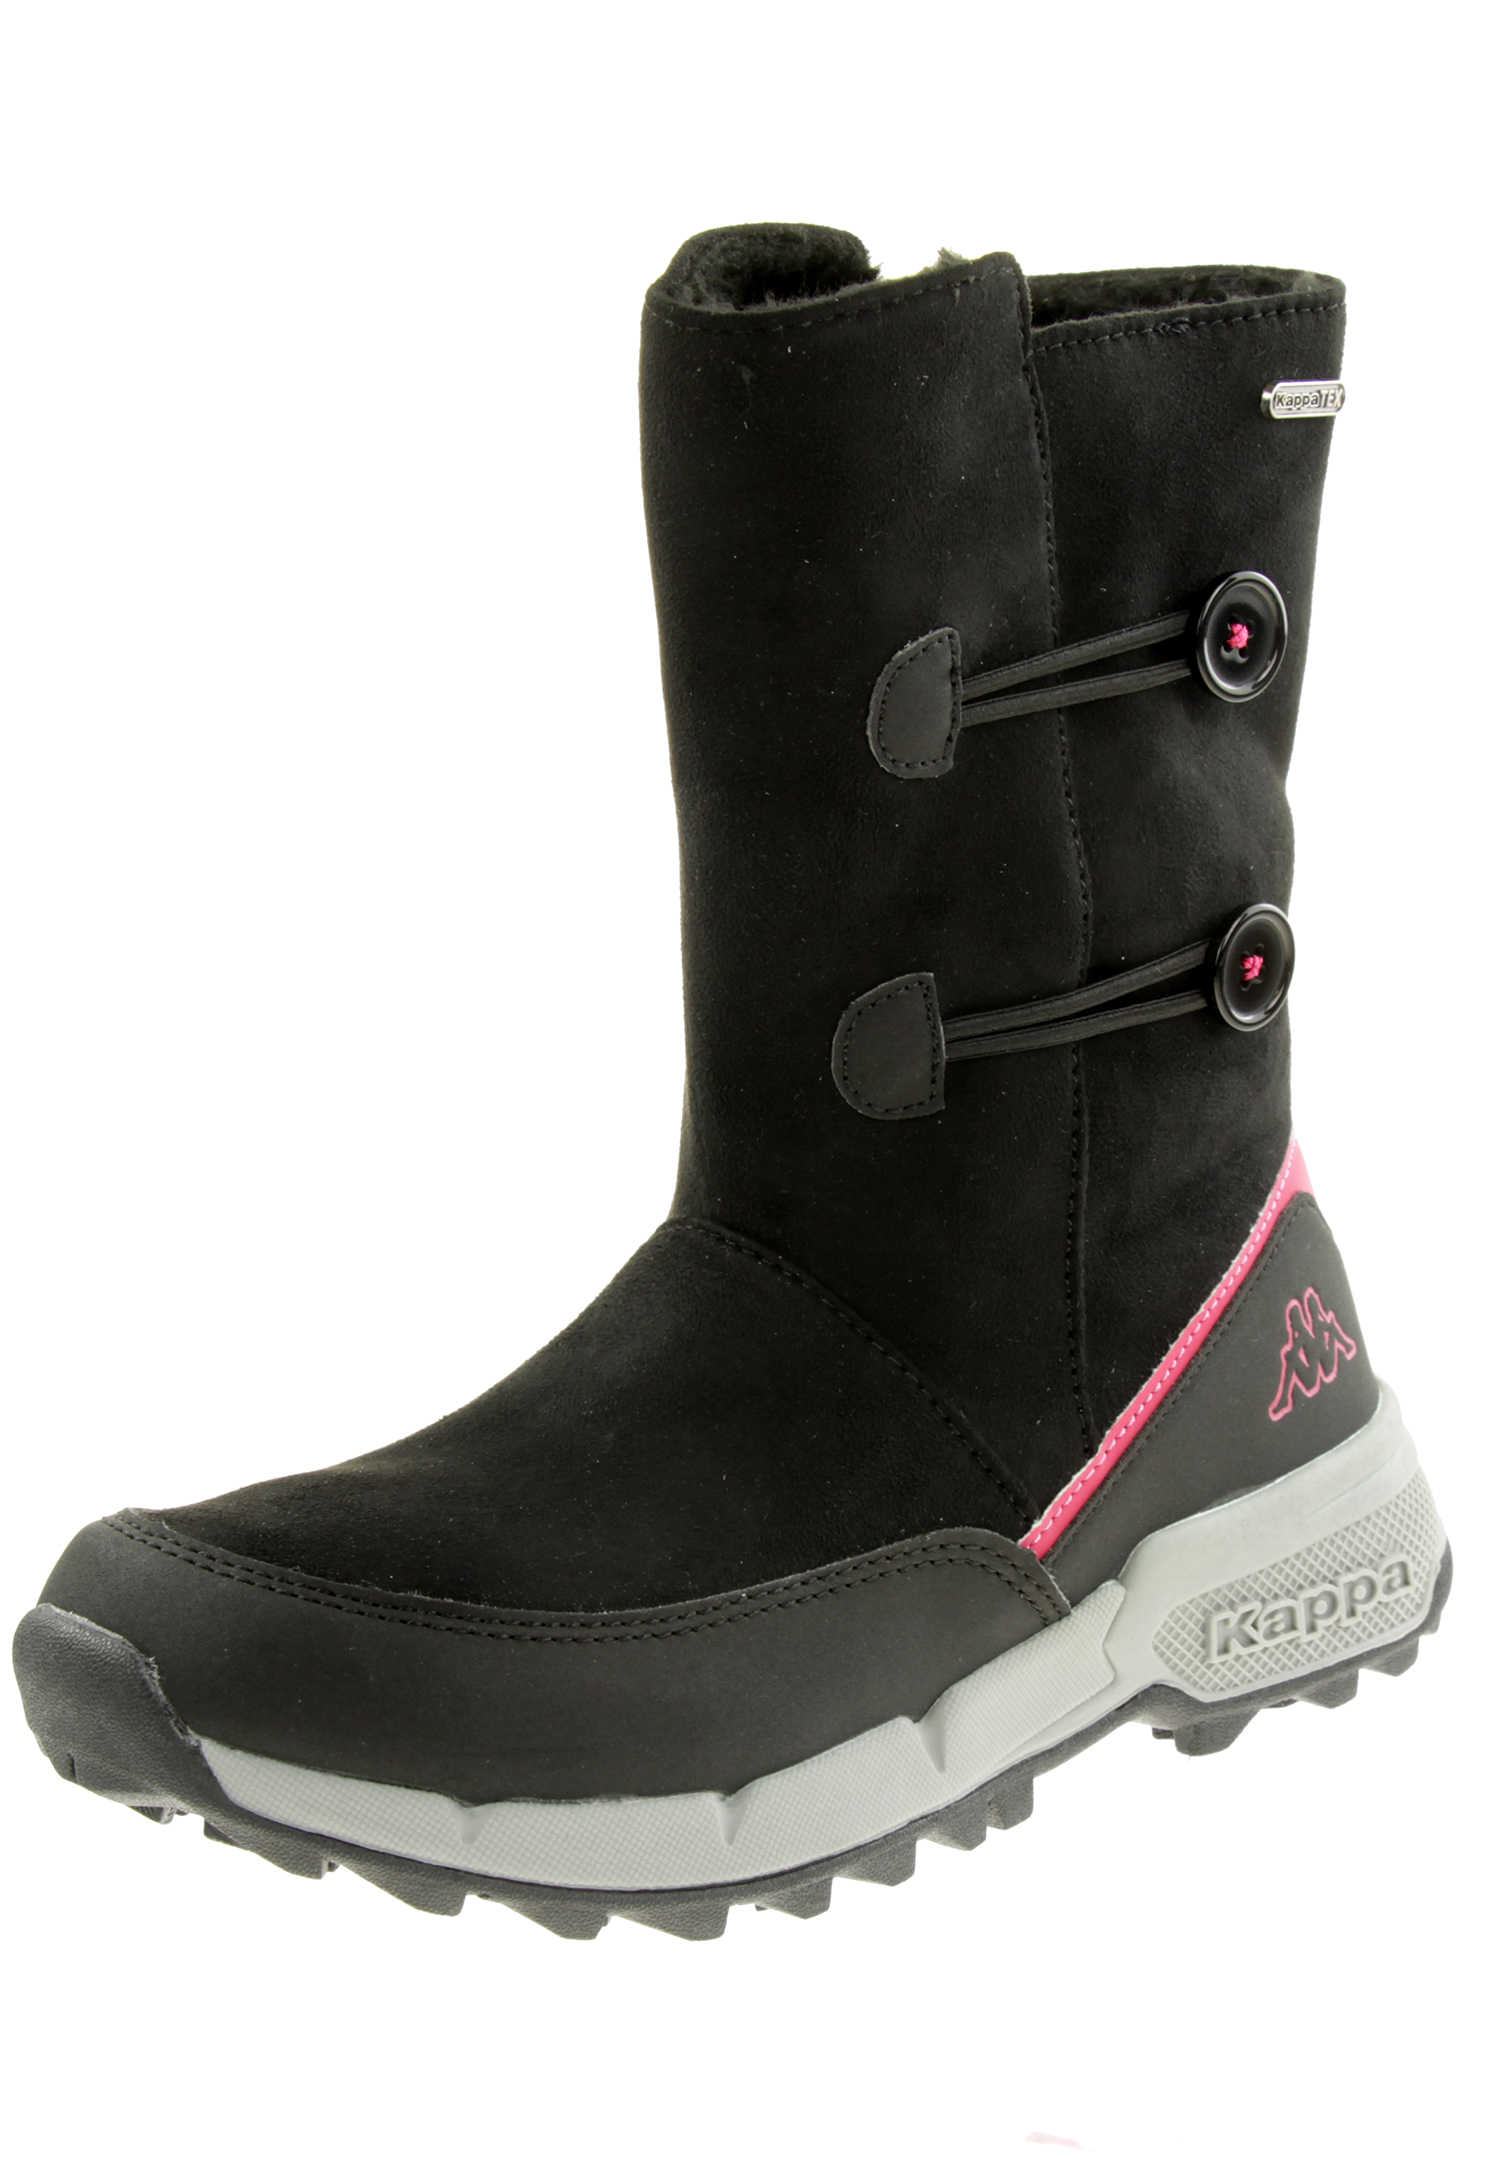 Kappa Damen Kids Stiefelette Winterschuh Boots 260901T schwarz pink